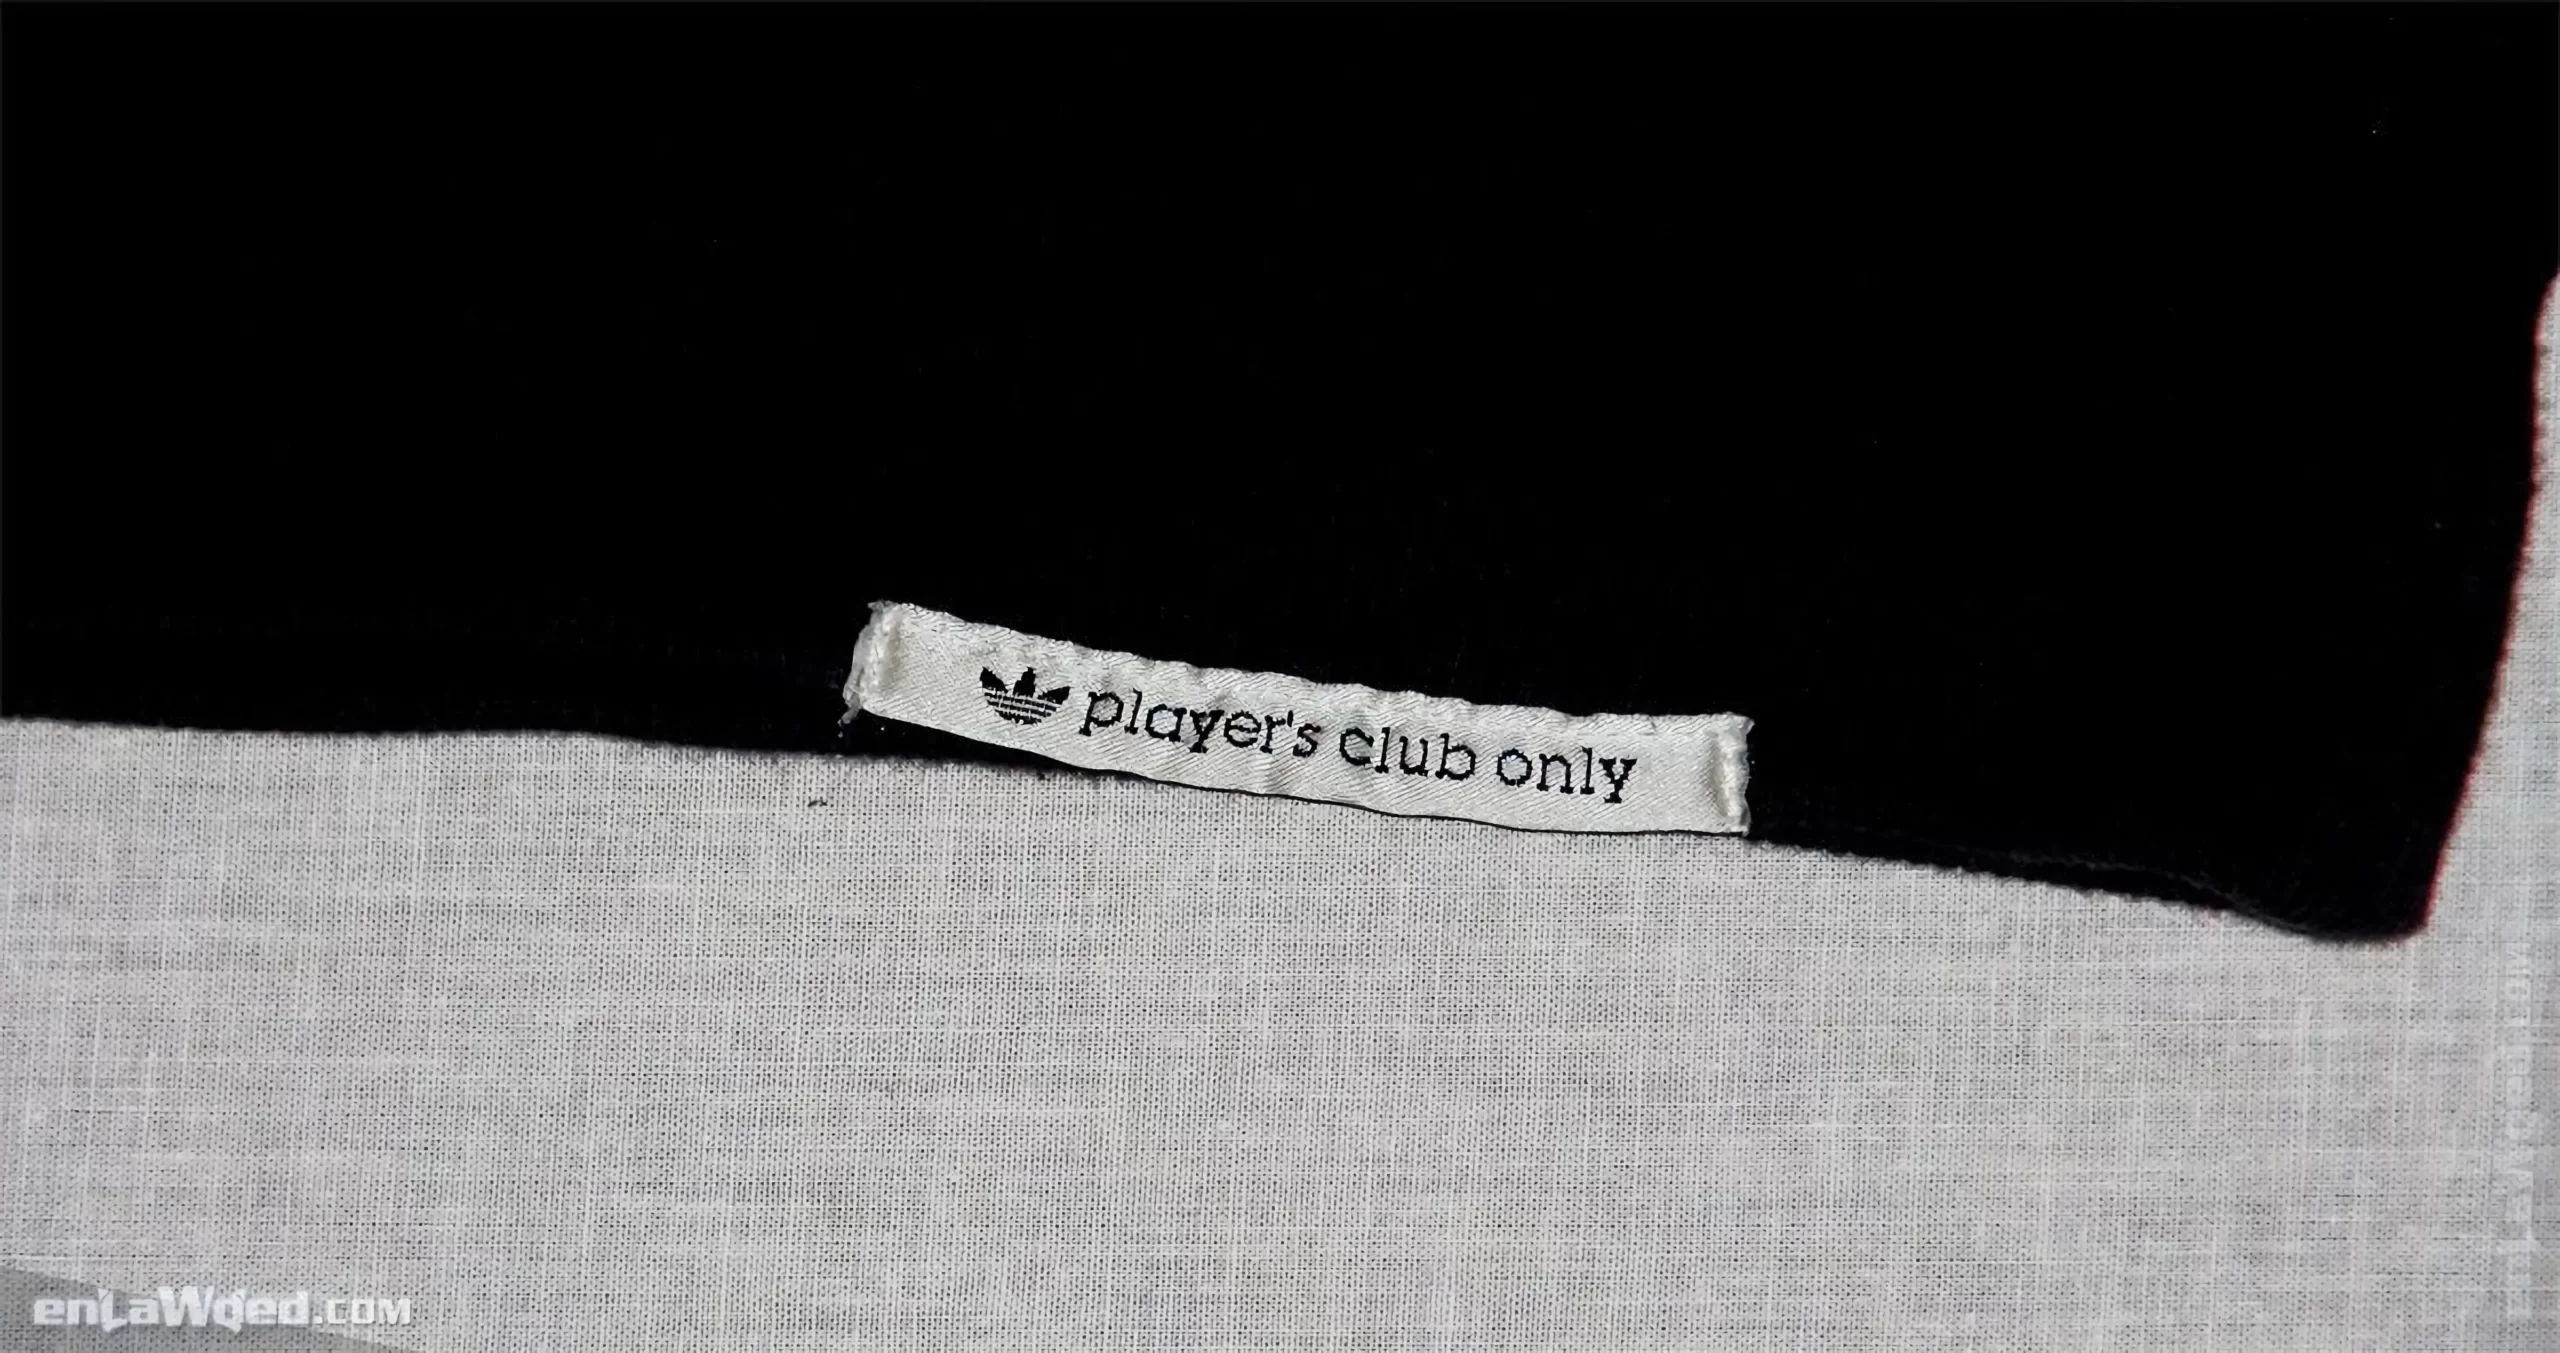 Men’s 2006 James Hunt Player’s Sweatshirt by Adidas: Spunky (EnLawded.com file #lmchk90313ip2y125018kg9st)